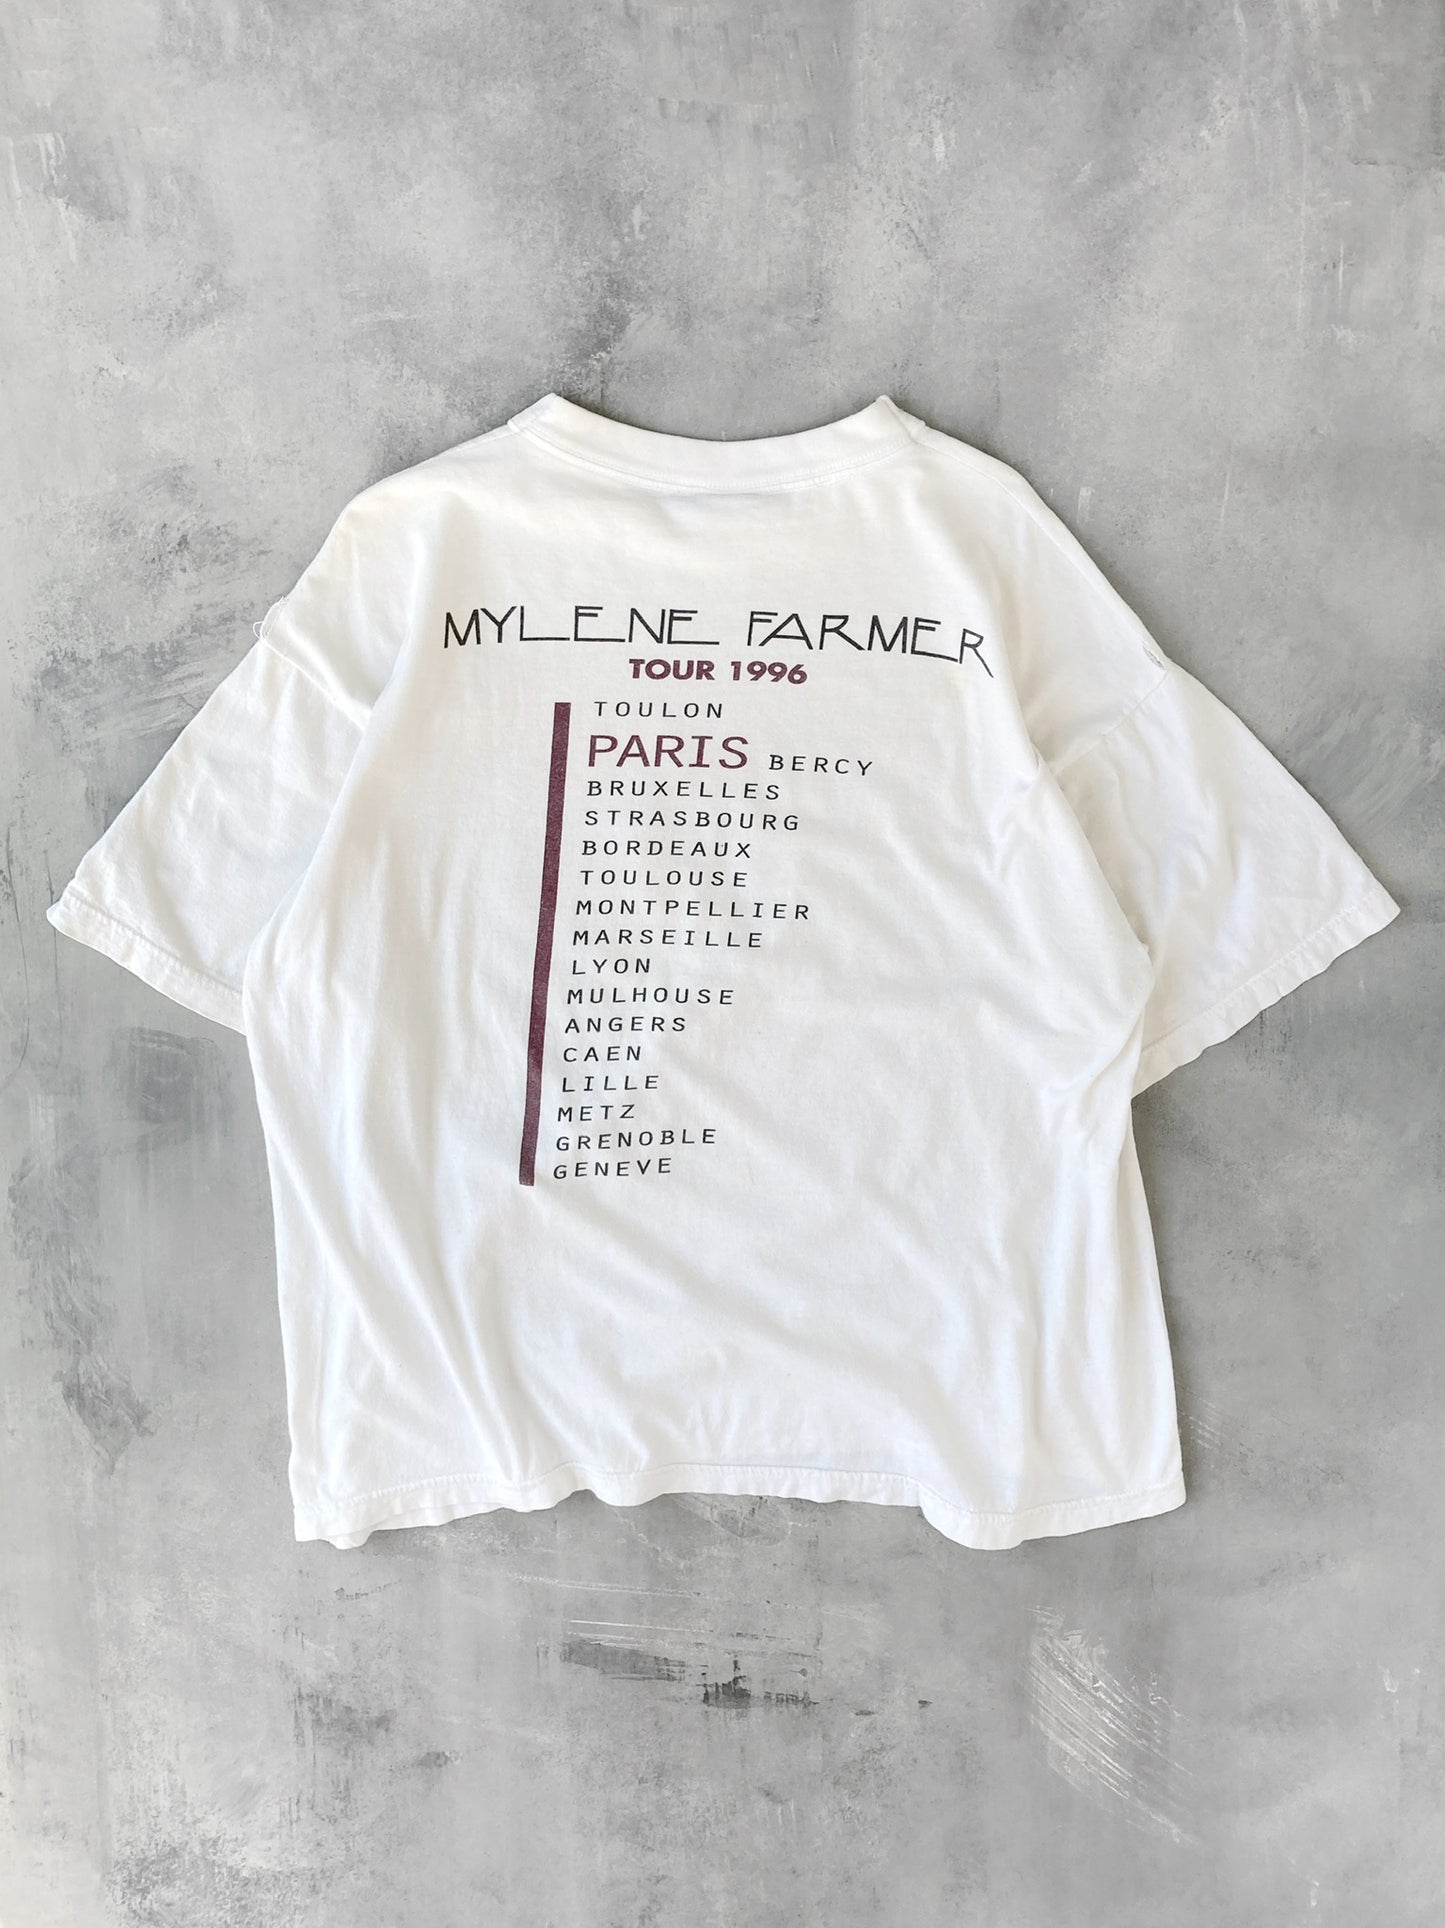 Mylene Farmer Tour T-shirt '96 - XL